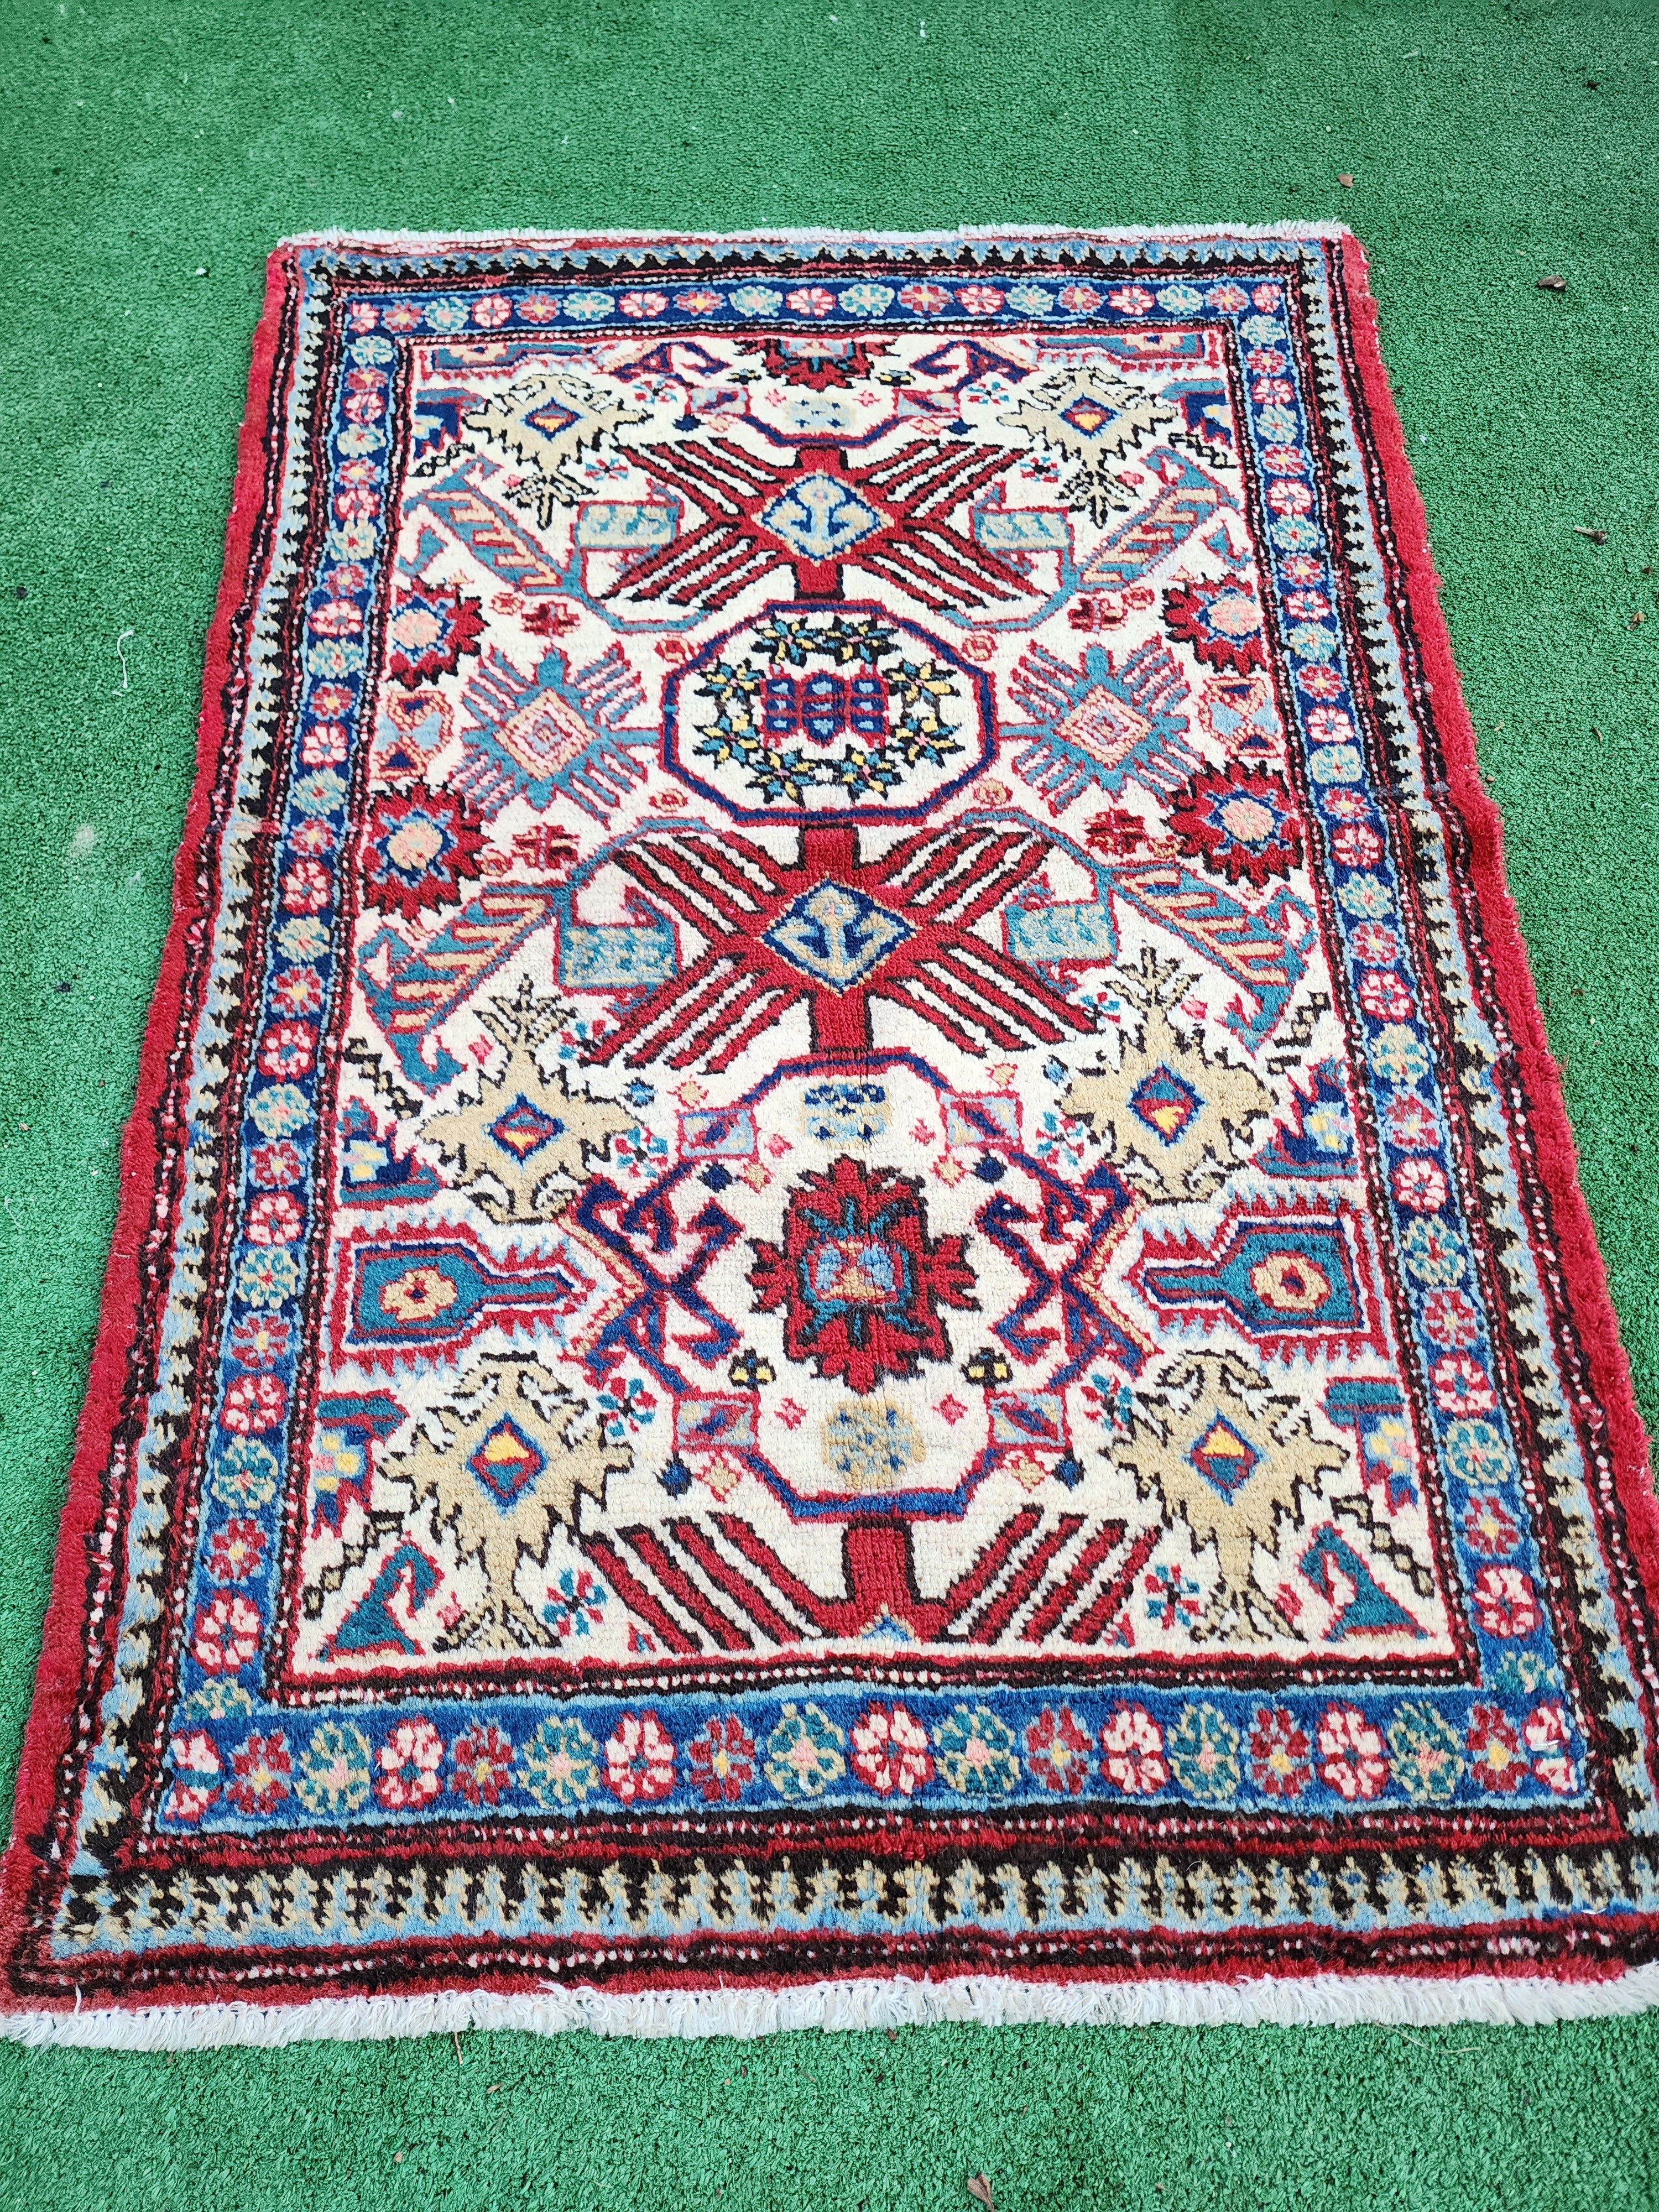 Small Vintage Persian Rug, 3 ft 5 in x 2 ft 6 in, Red White Blue HandmadeTribal Nomadic Turkish Door Mat